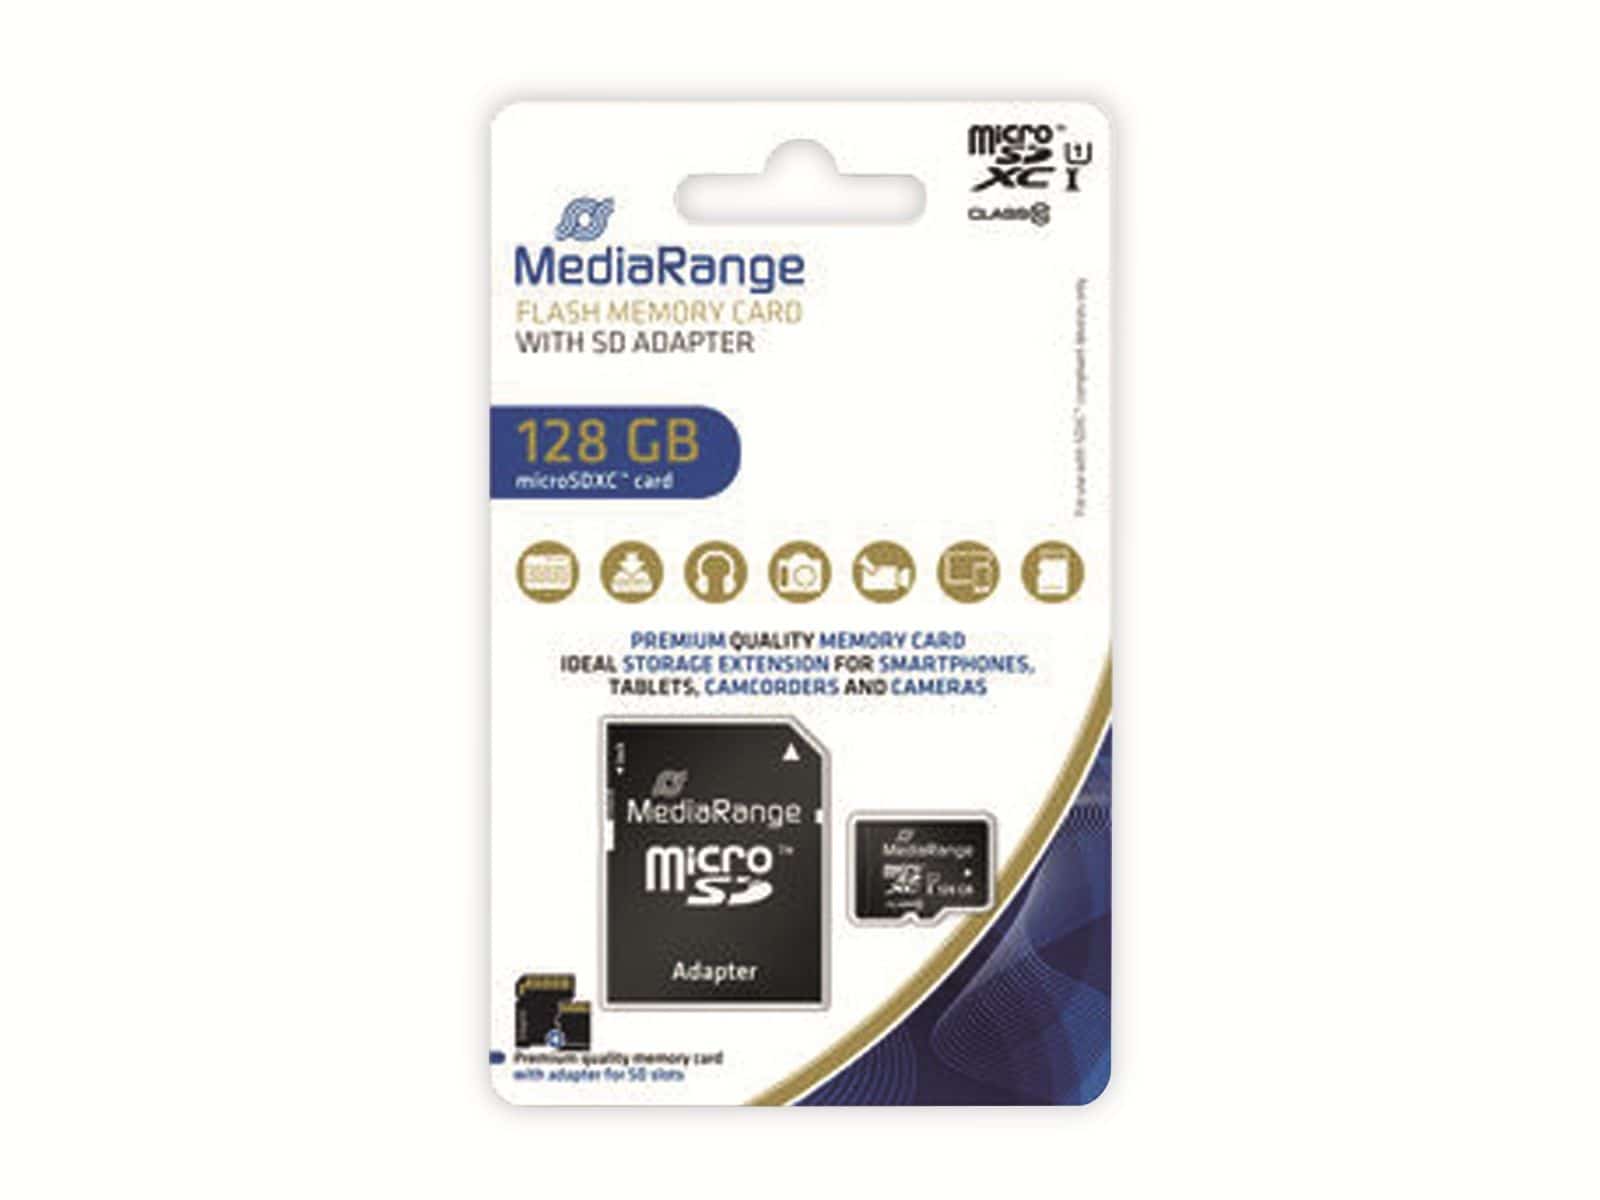 MEDIARANGE MicroSD-Card Class 10, 128 GB von Mediarange